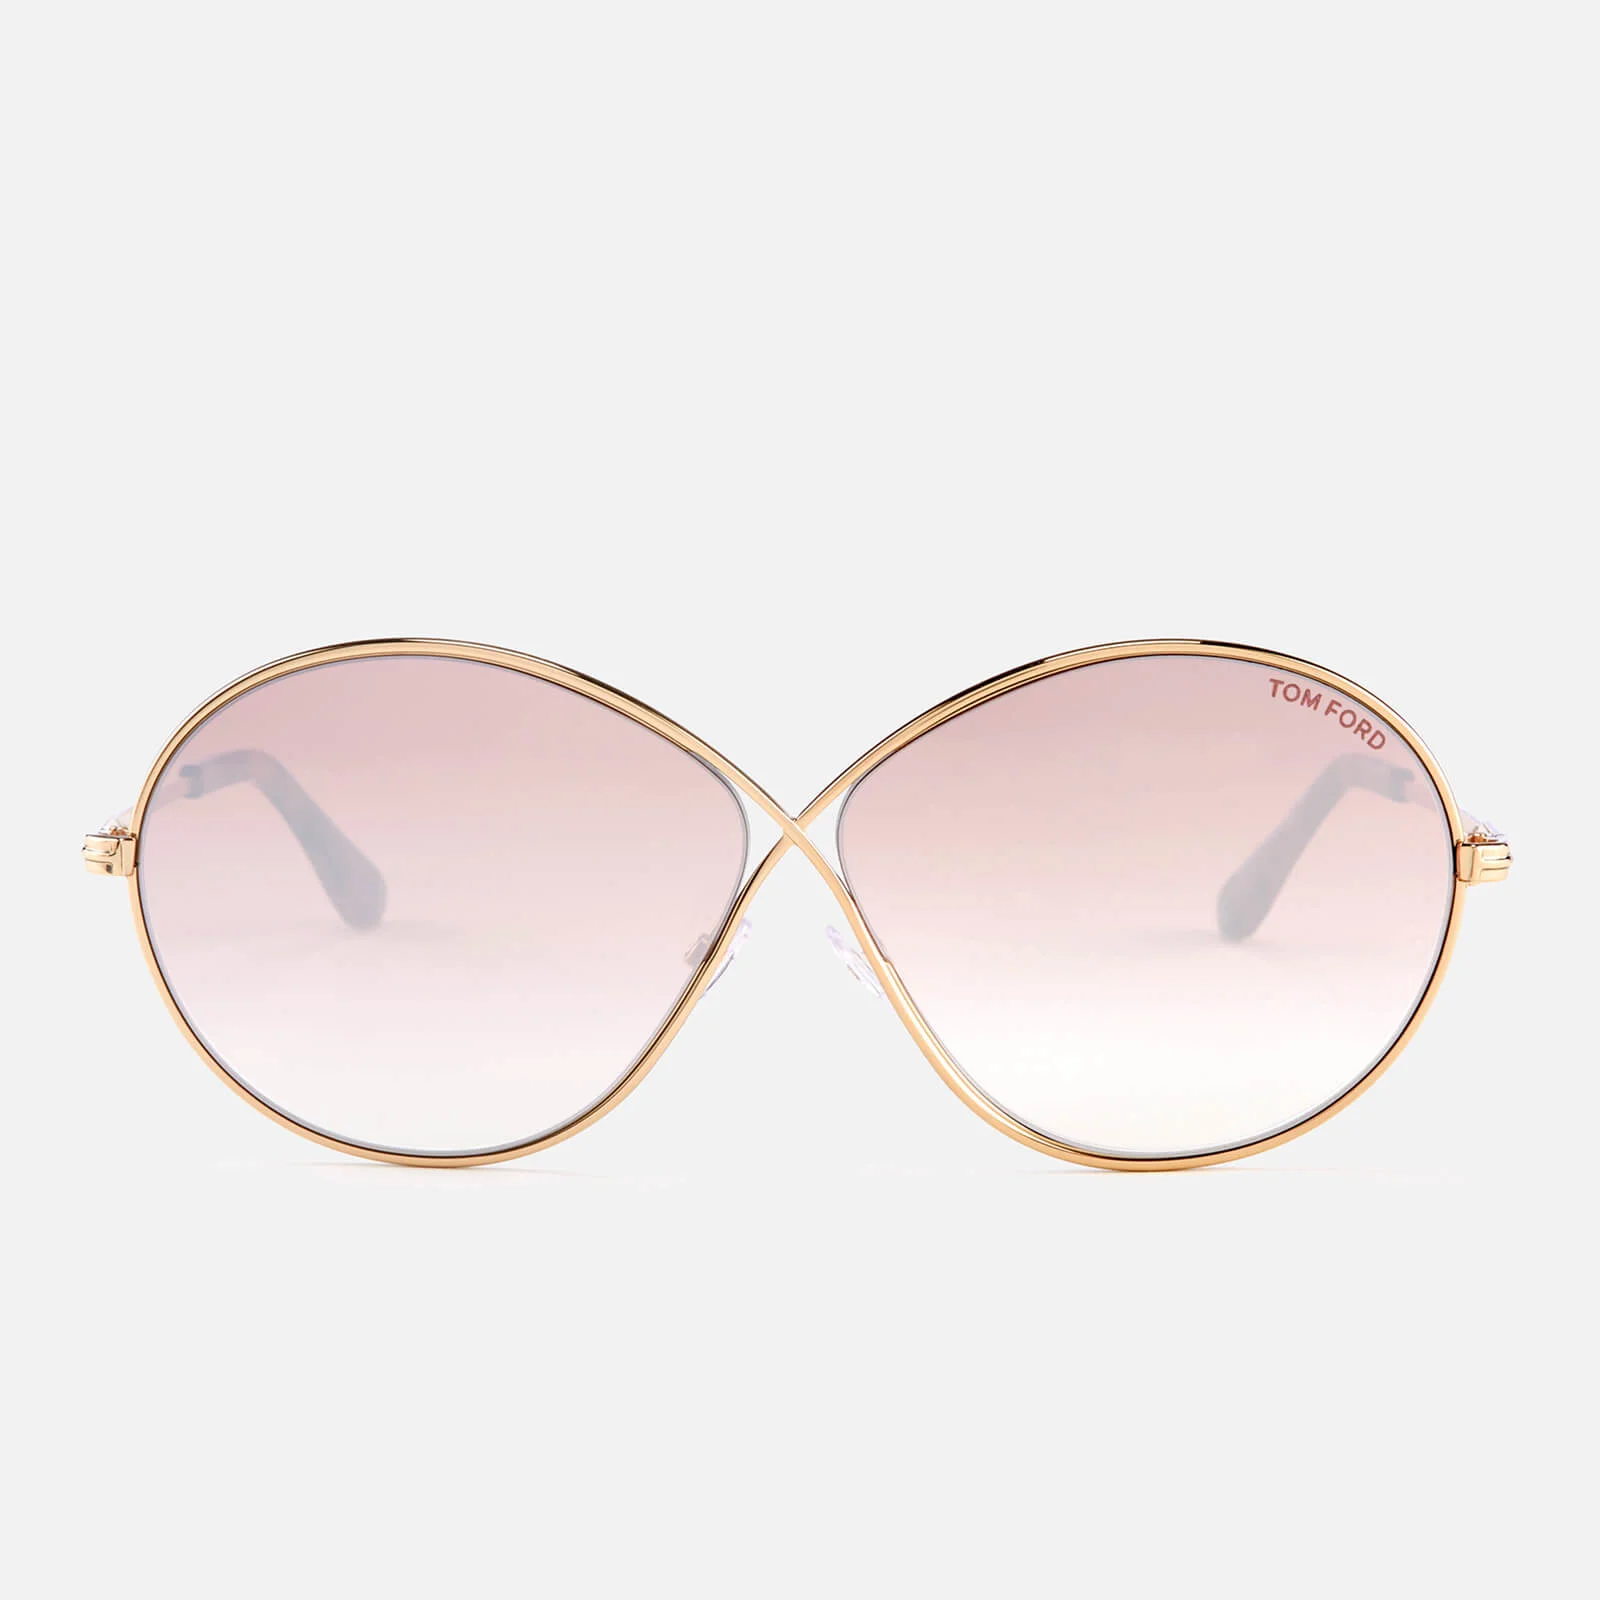 Tom Ford Women's Rania Sunglasses - Shiny Rose Gold/Gradient Image 1